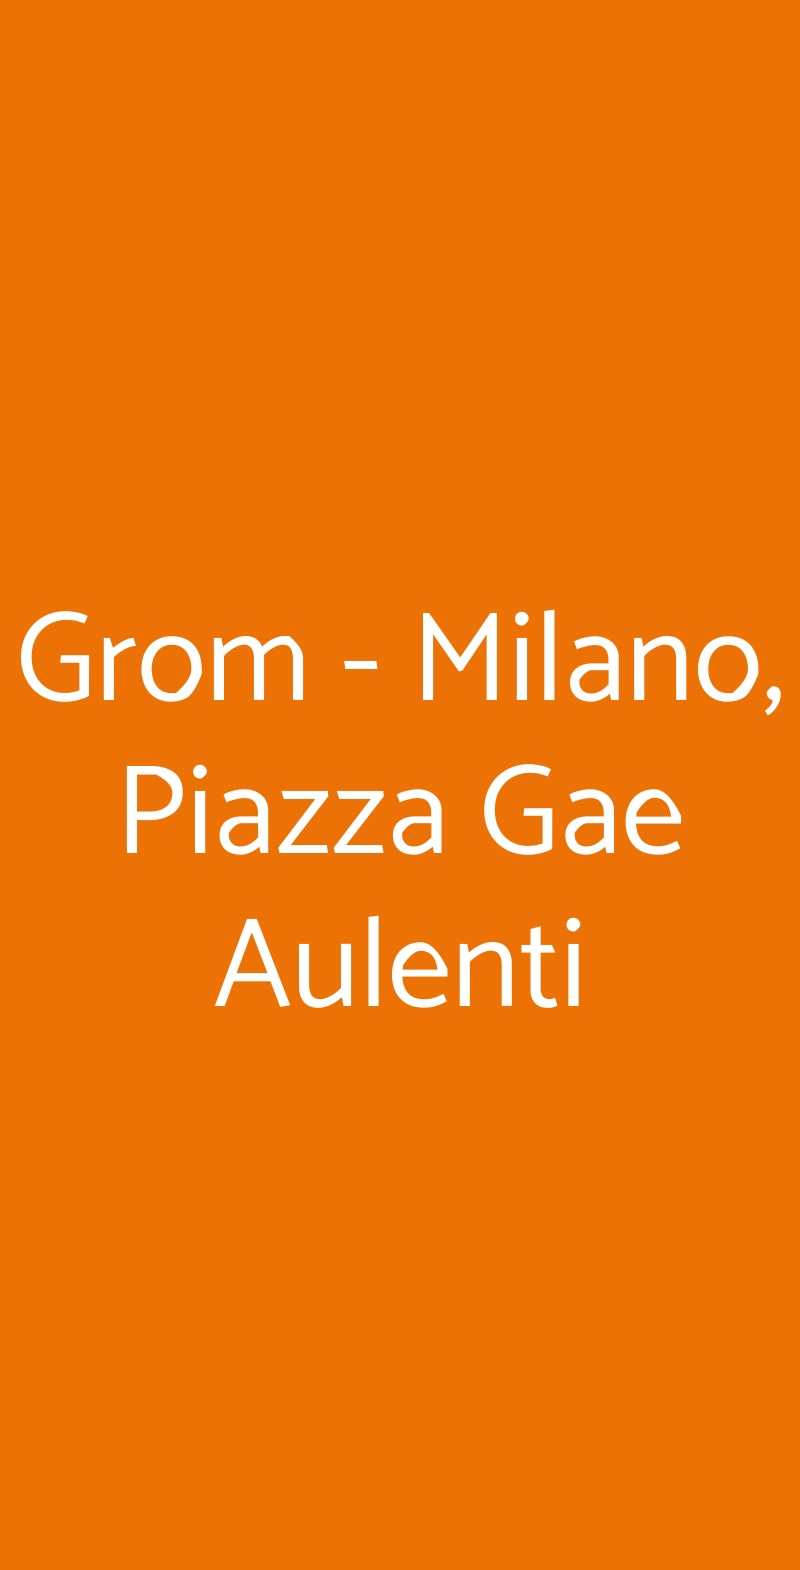 Grom - Milano, Piazza Gae Aulenti Milano menù 1 pagina